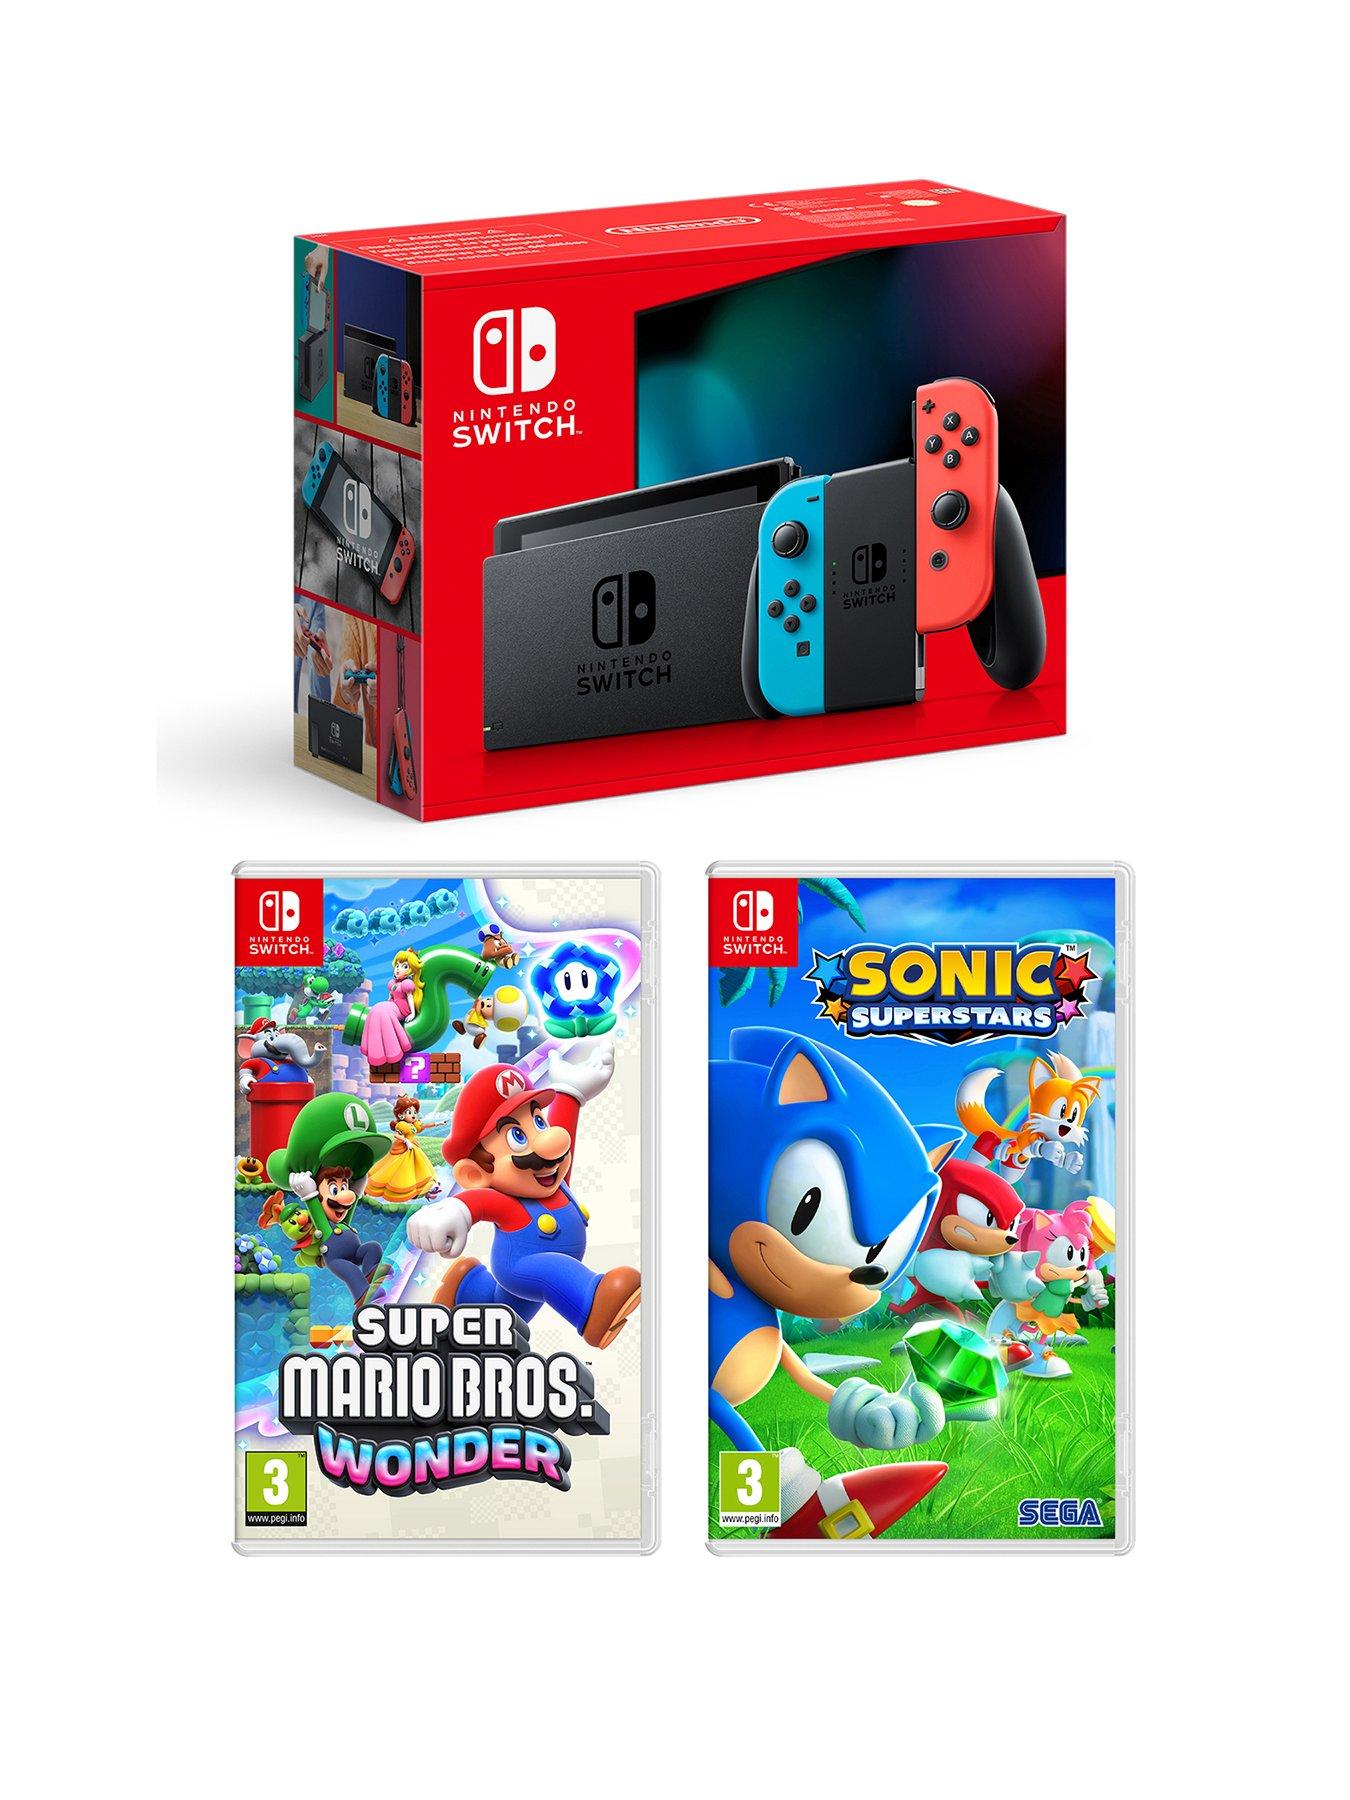 Super Mario Bros. Wonder (Nintendo Switch) + 12-Month Nintendo Switch Online  Family Membership Code for $59.99 + Free Shipping